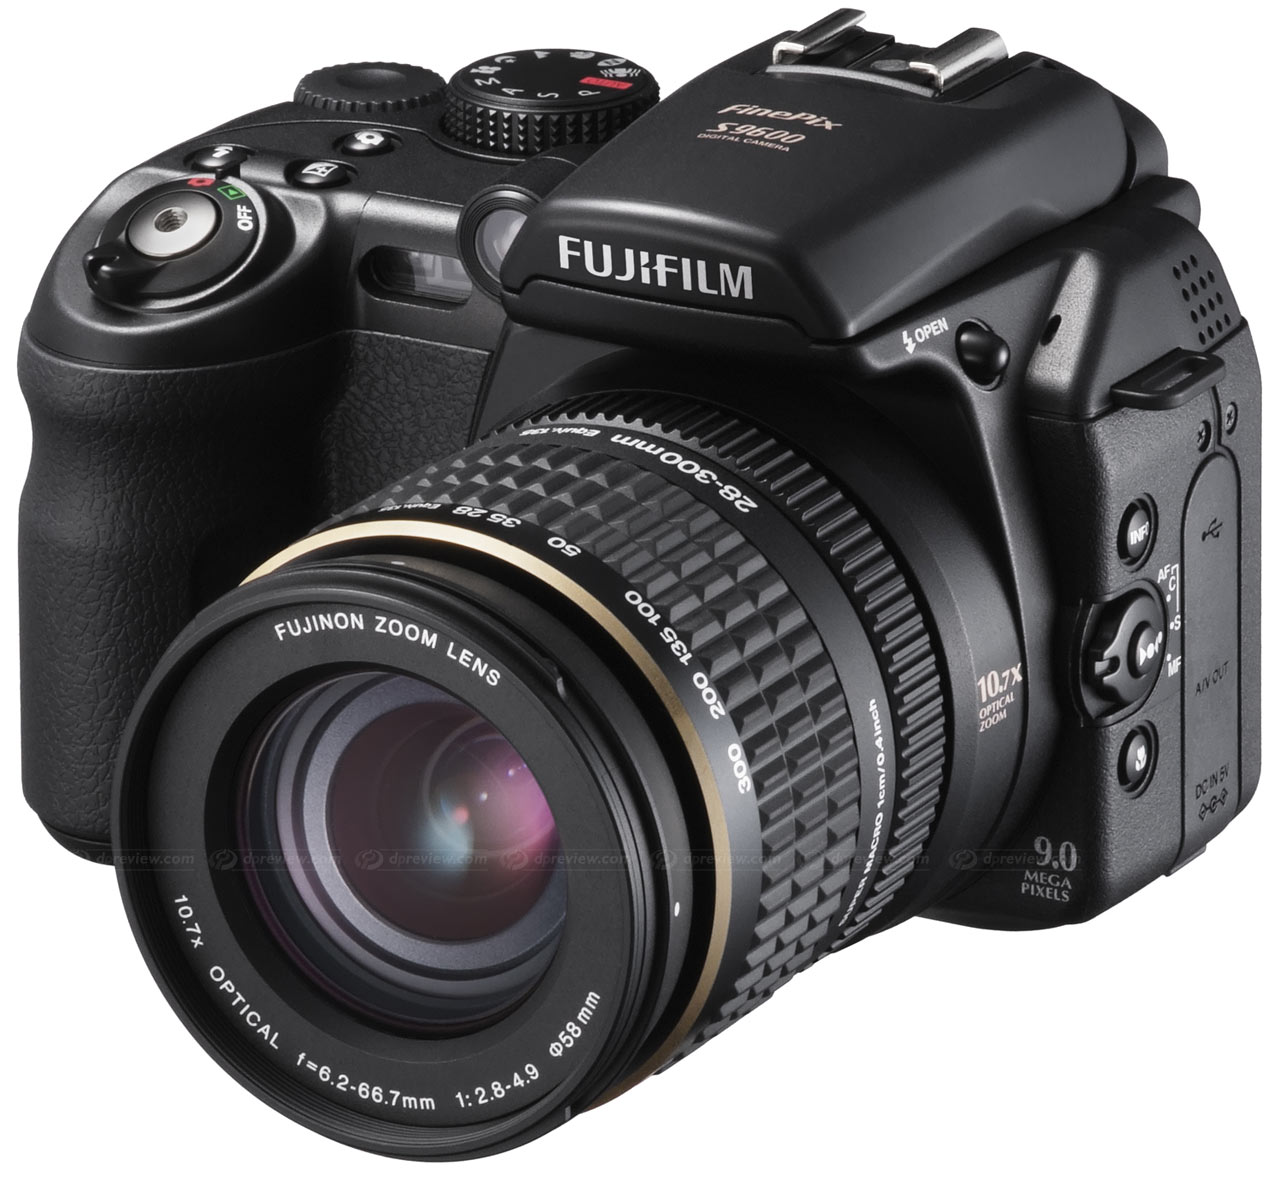 Fujifilm Finepix S9600 Digital Camera